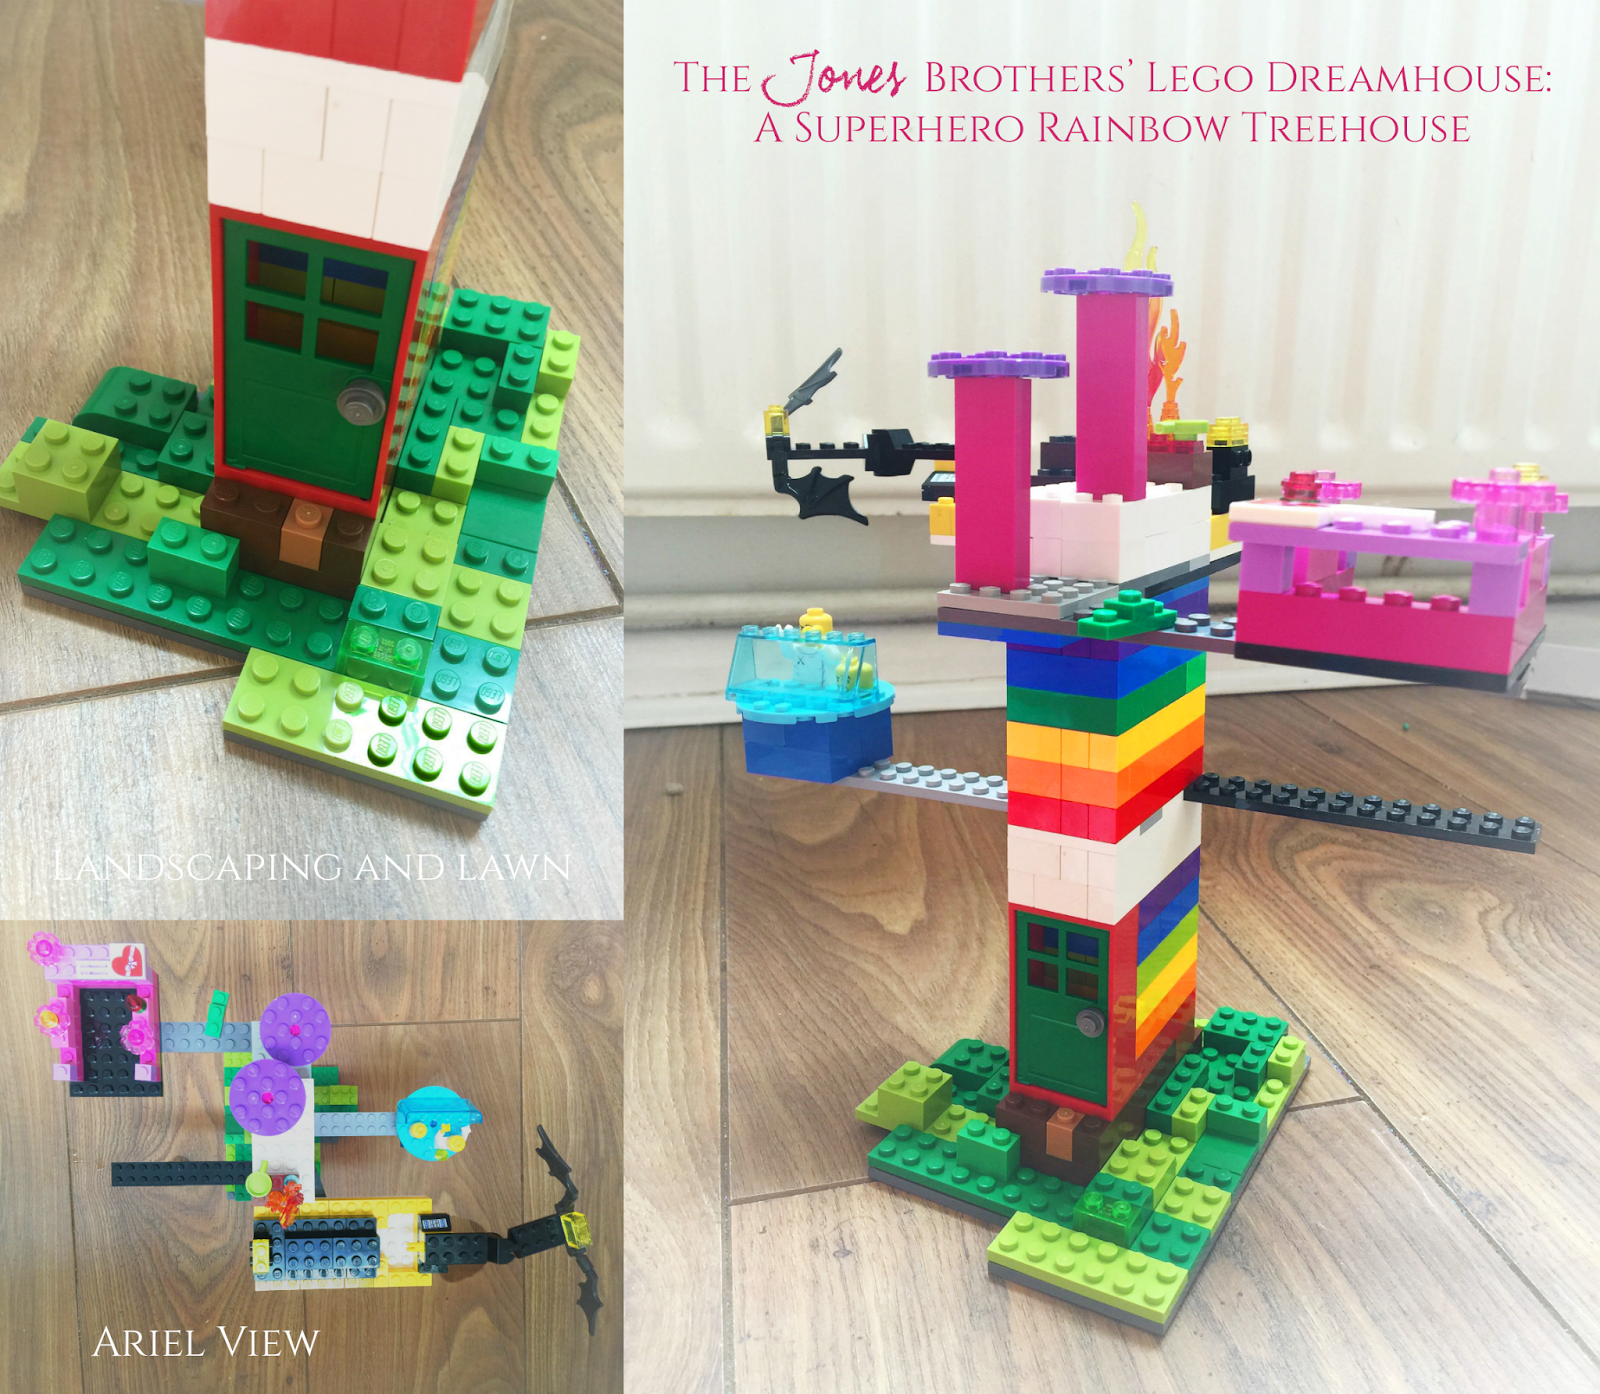 THE JONES BROTHERS’ LEGO DREAM HOUSE